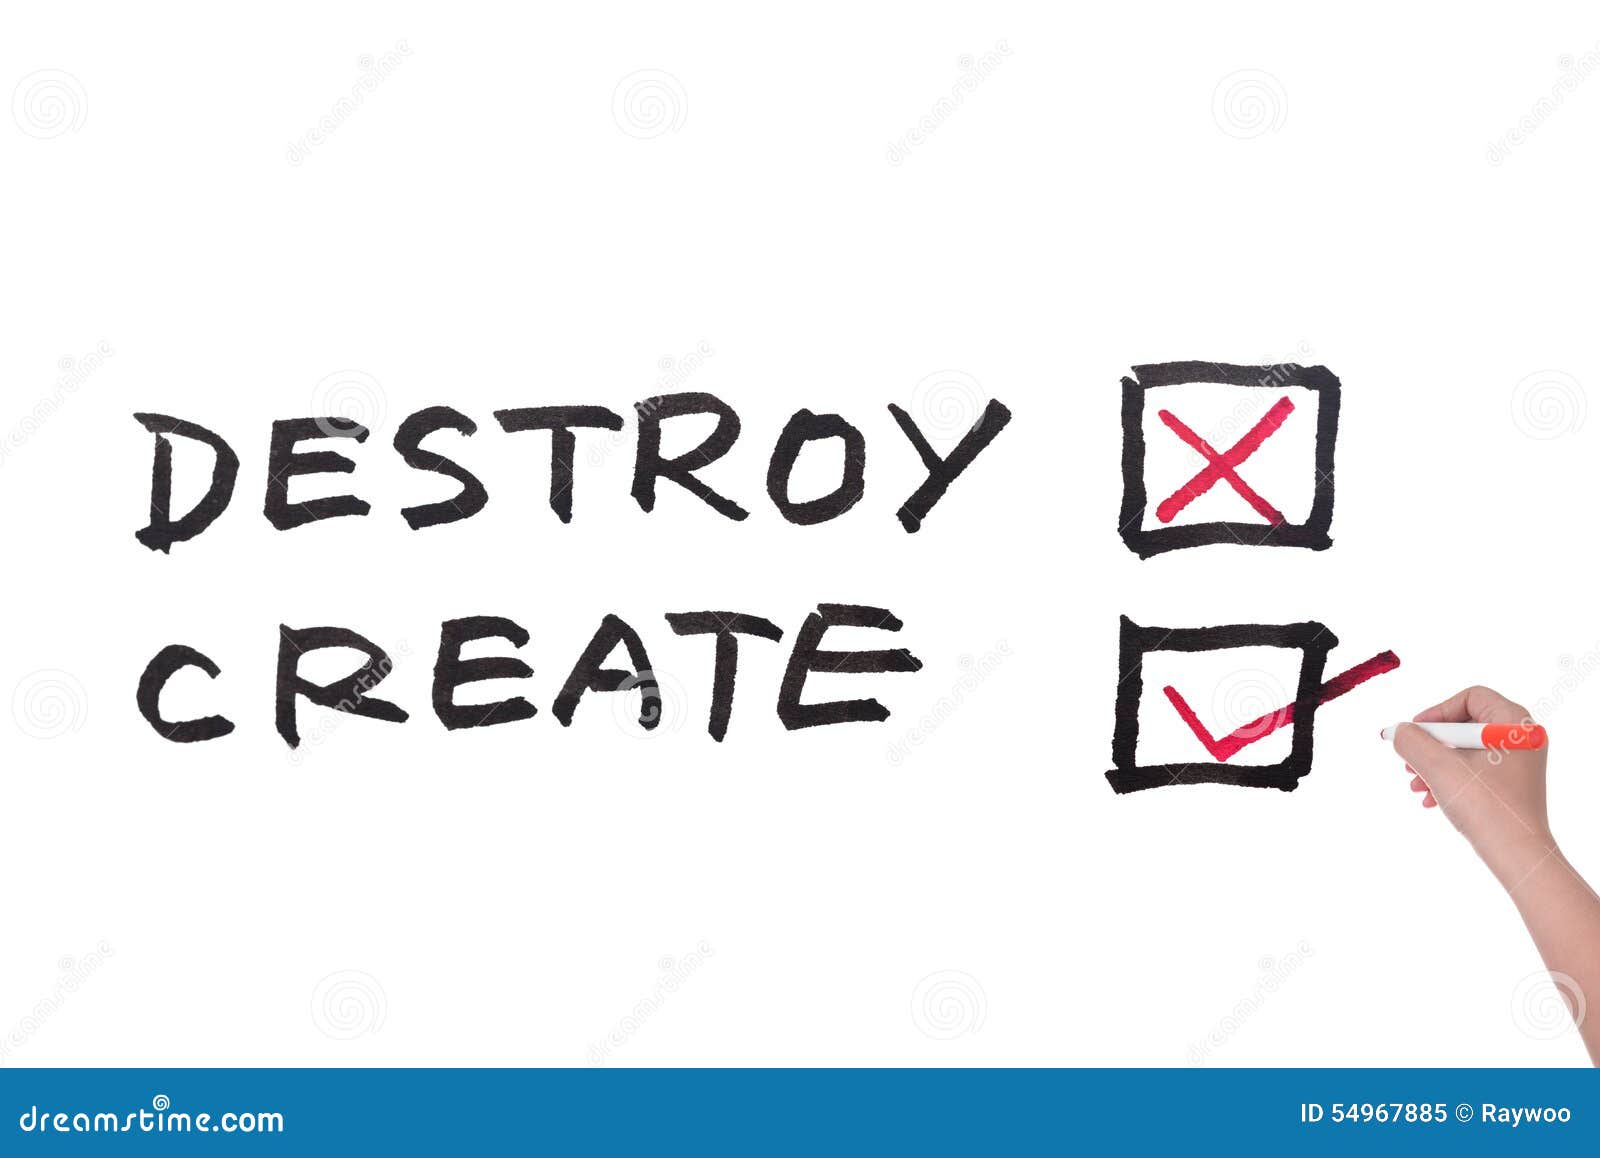 destroy or create